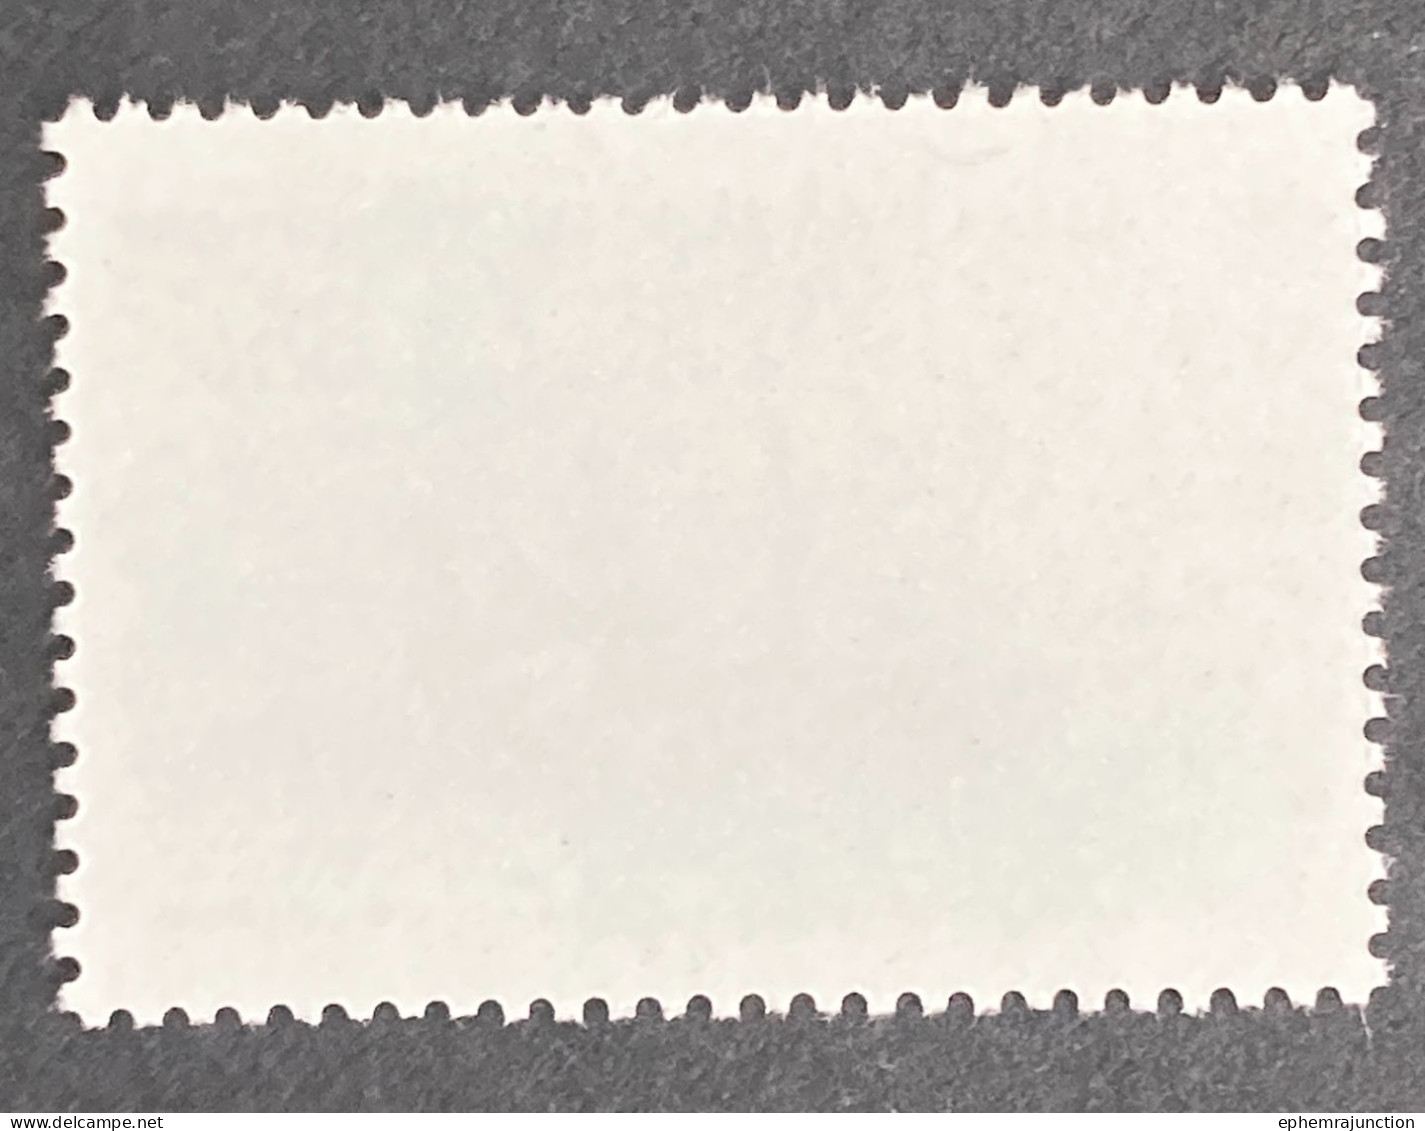 Nella Dan (Supply Ship) 35c Australia Stamp 1980 Sg Aq 47 MNH - Nuevos